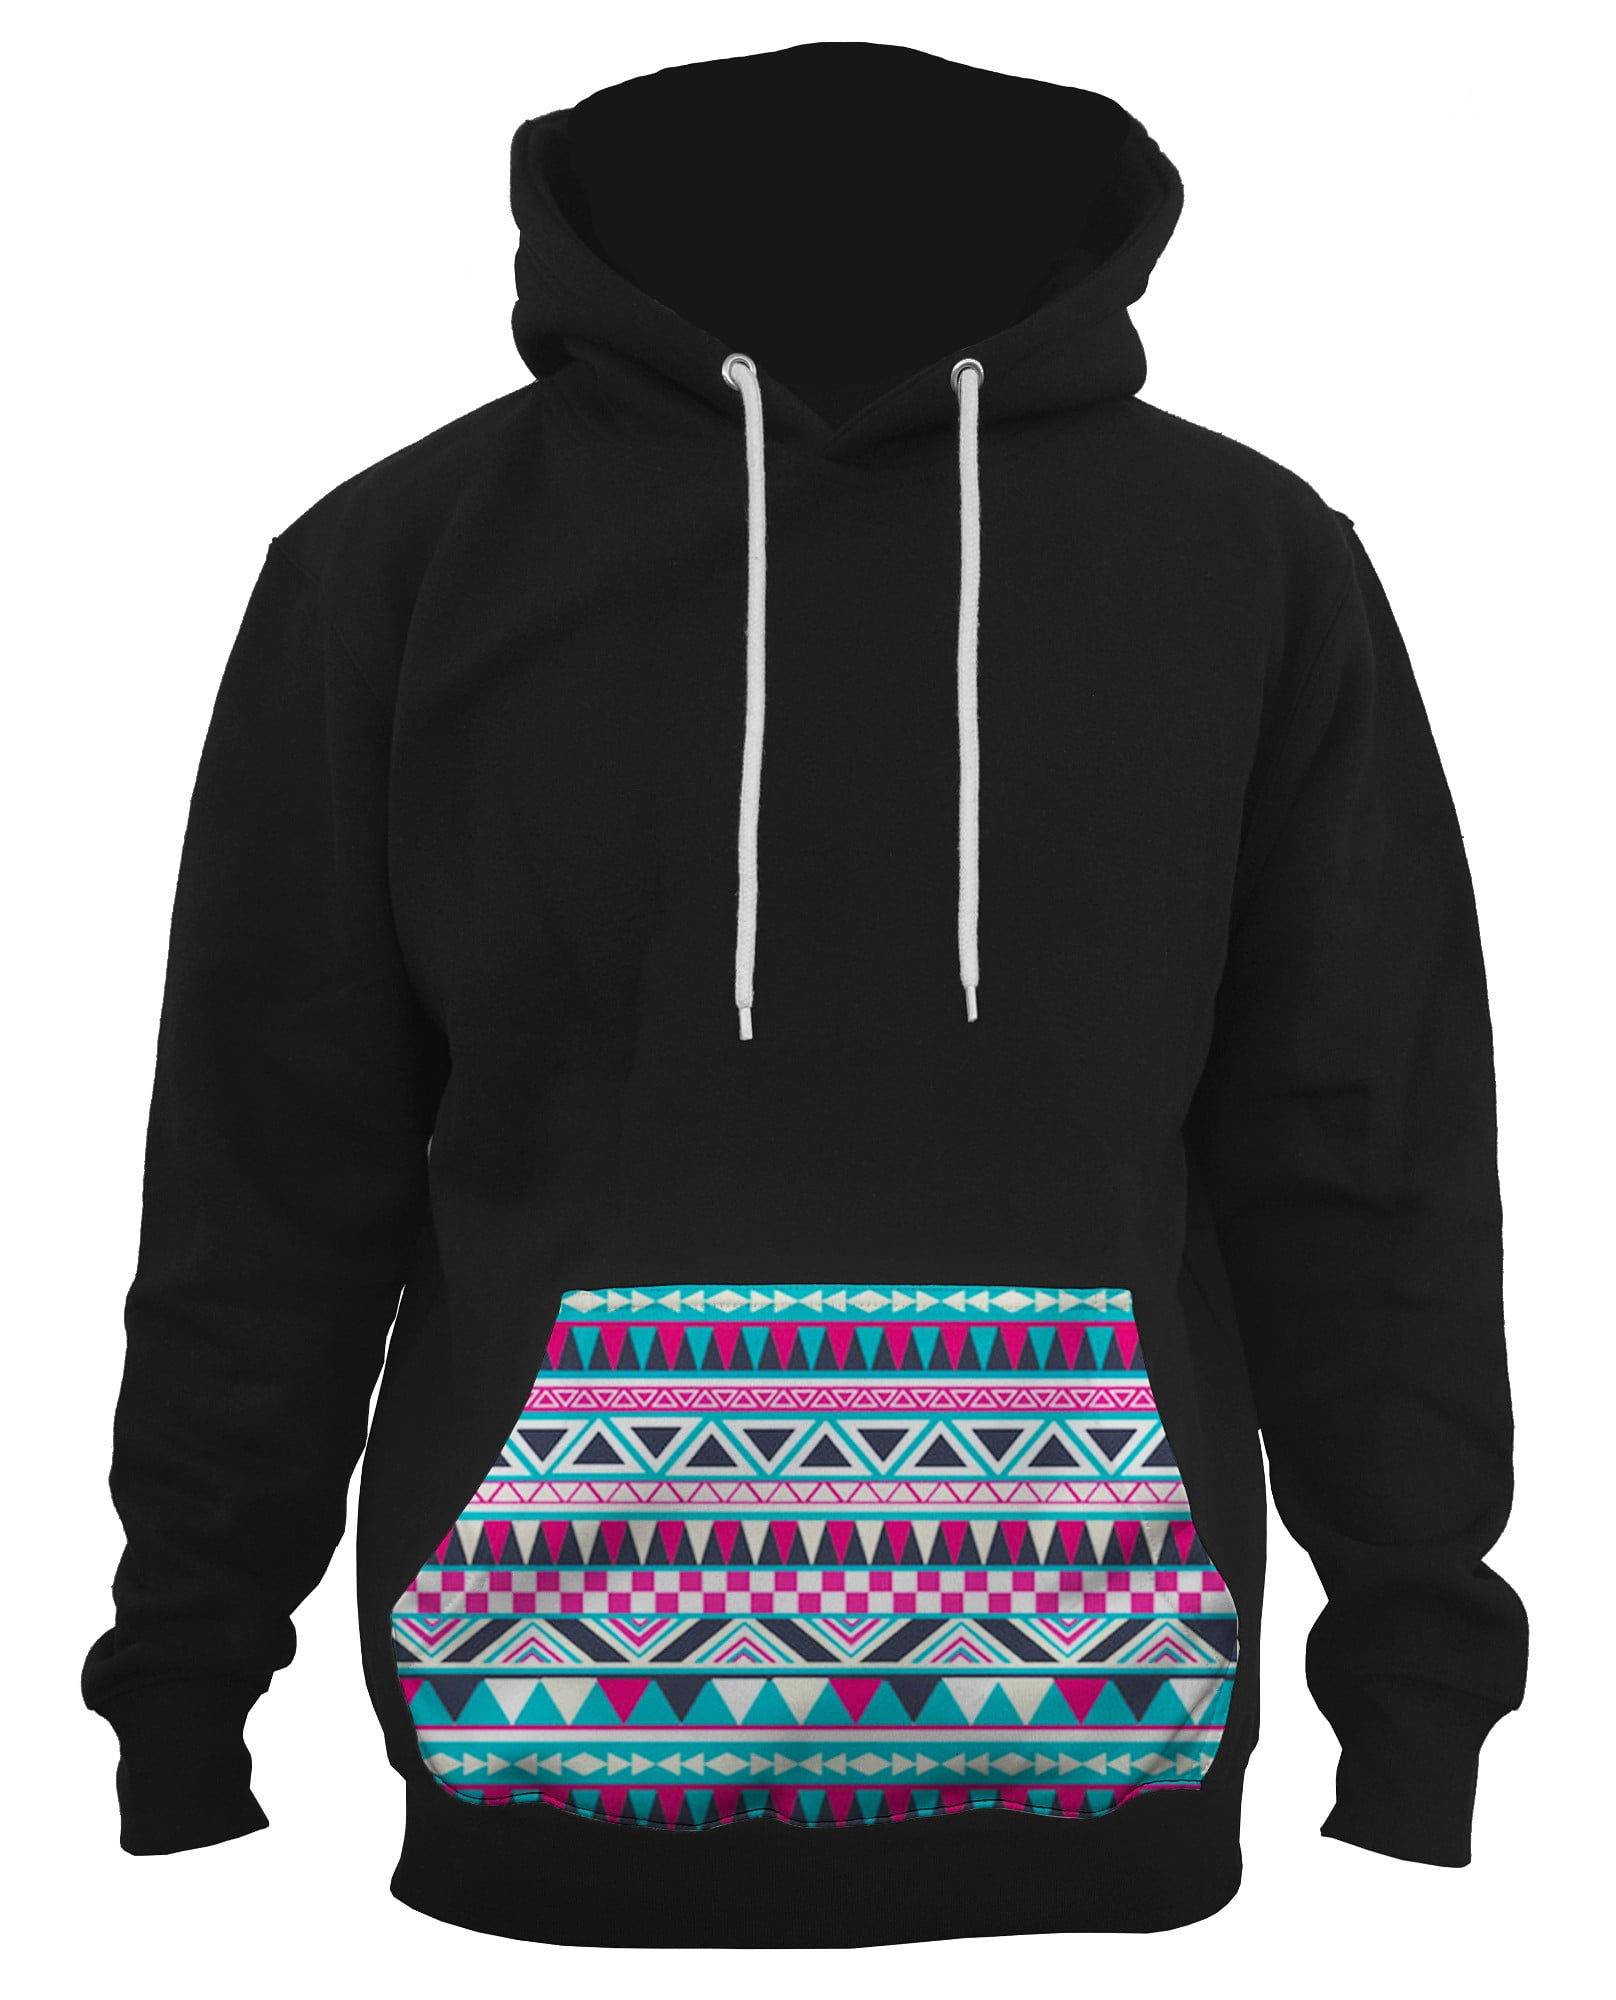 Red Tribal Aztec Warrior Tee V386 Mens Black/Charcoal Raglan Baseball Hoodie Sweater Black